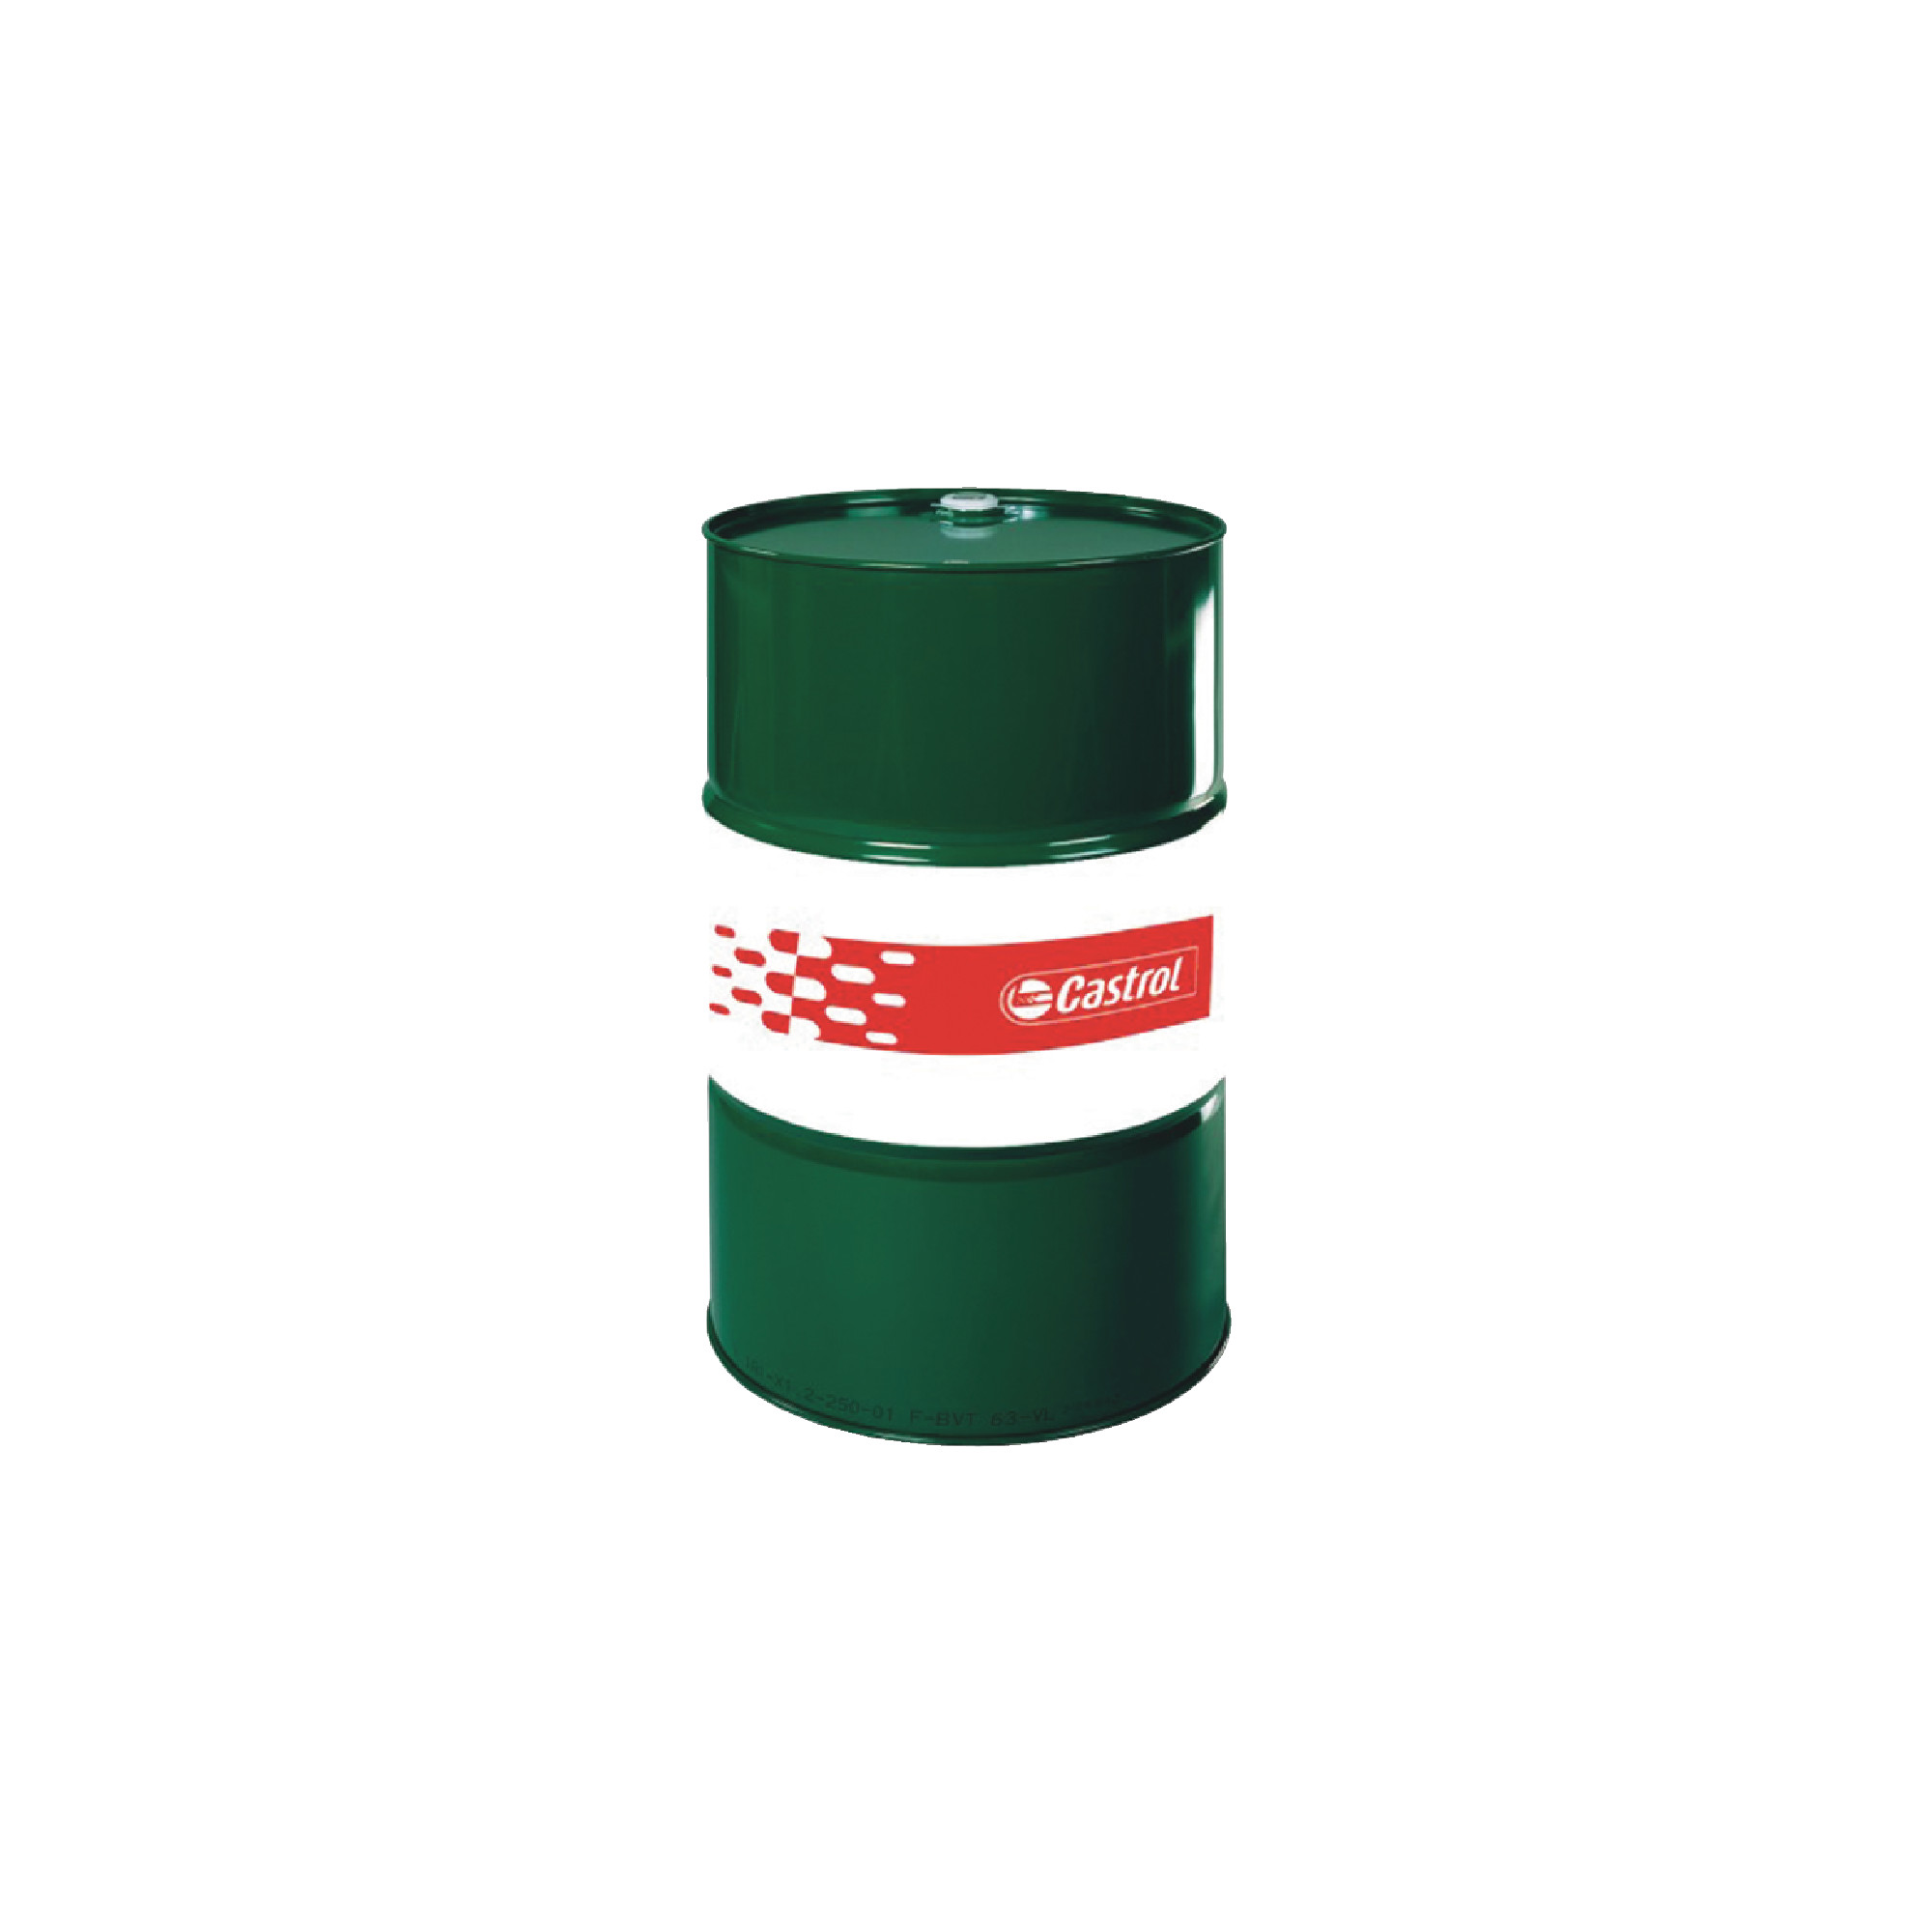 CASTROL HYSOL MB 10 55 Gallon Drum Heavy-Duty Water Soluble Oil